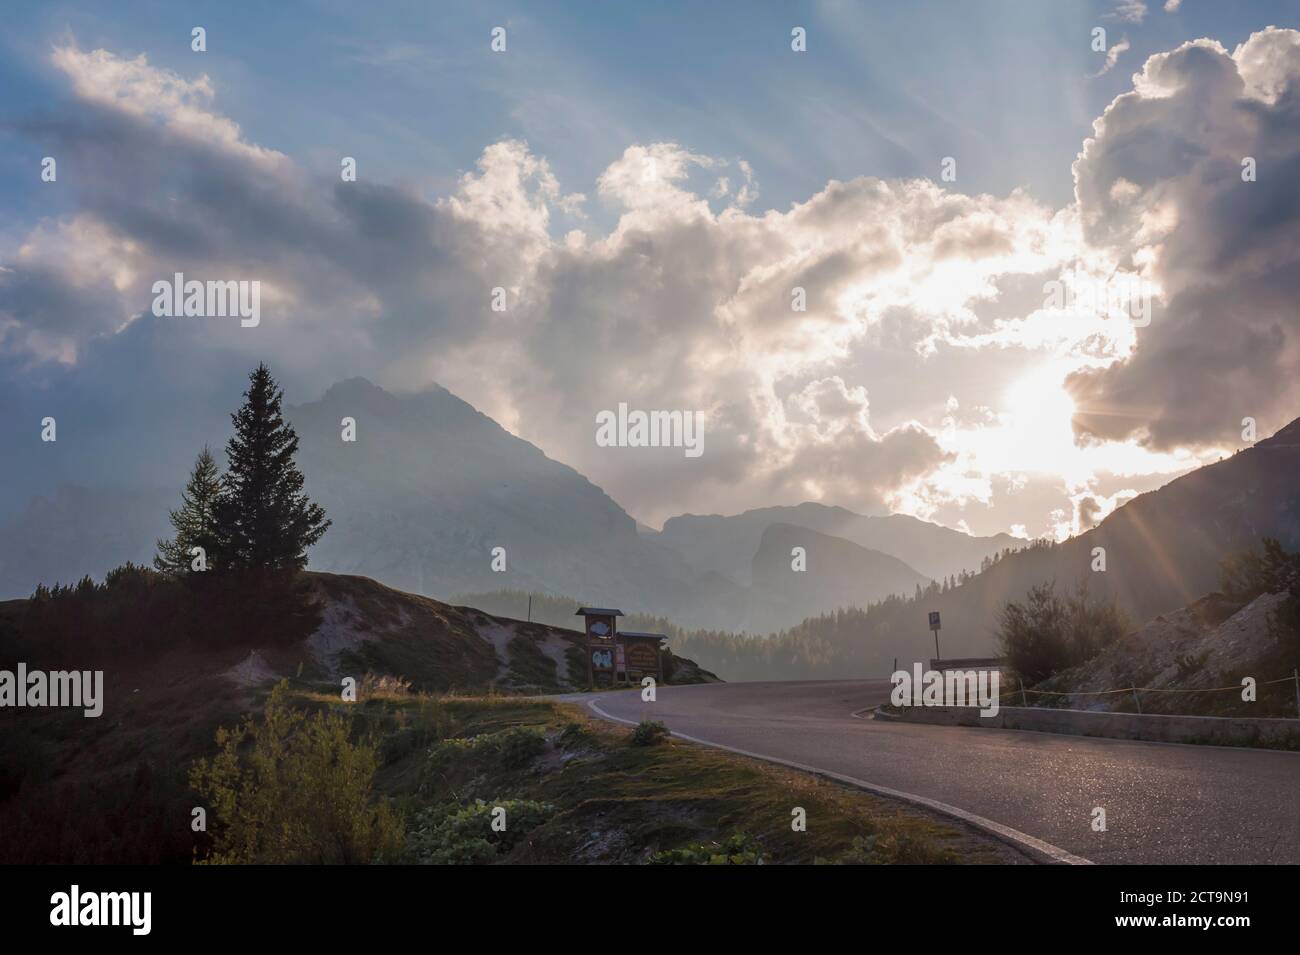 Italy, Dolomite Alps, road at evening twilight Stock Photo